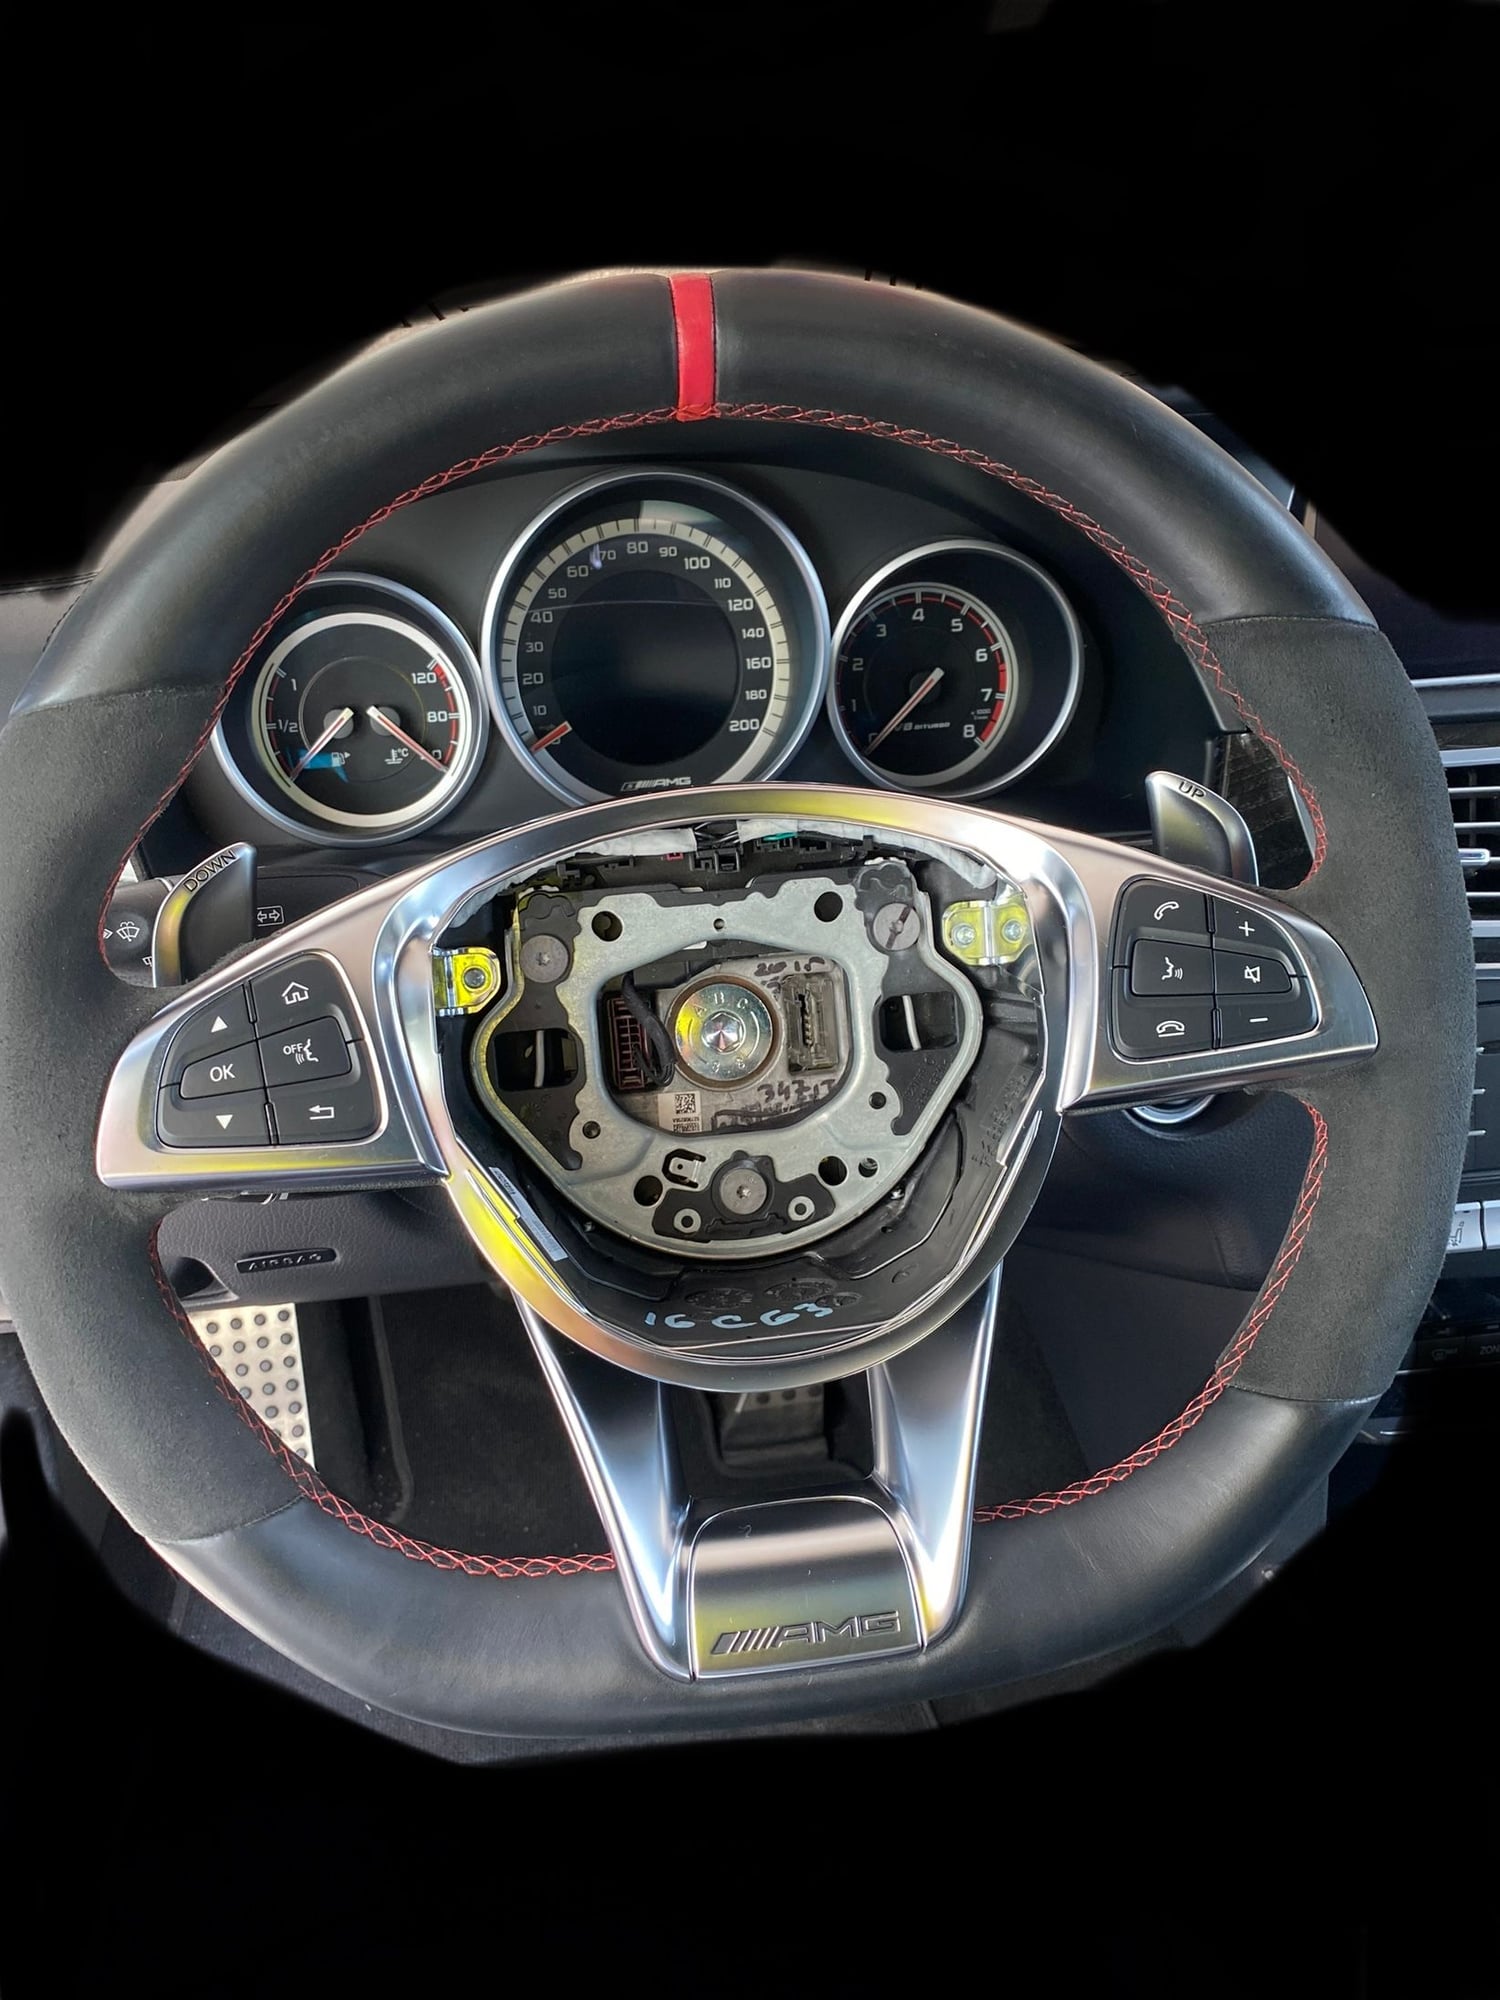 Interior/Upholstery - AMG Steering Wheel - Used - 2015 to 2018 Mercedes-Benz C63 AMG S - 2014 to 2018 Mercedes-Benz CLS63 AMG S - 2016 to 2019 Mercedes-Benz GLS63 AMG - 2014 to 2018 Mercedes-Benz SL63 AMG - Orange County, CA 92705, United States